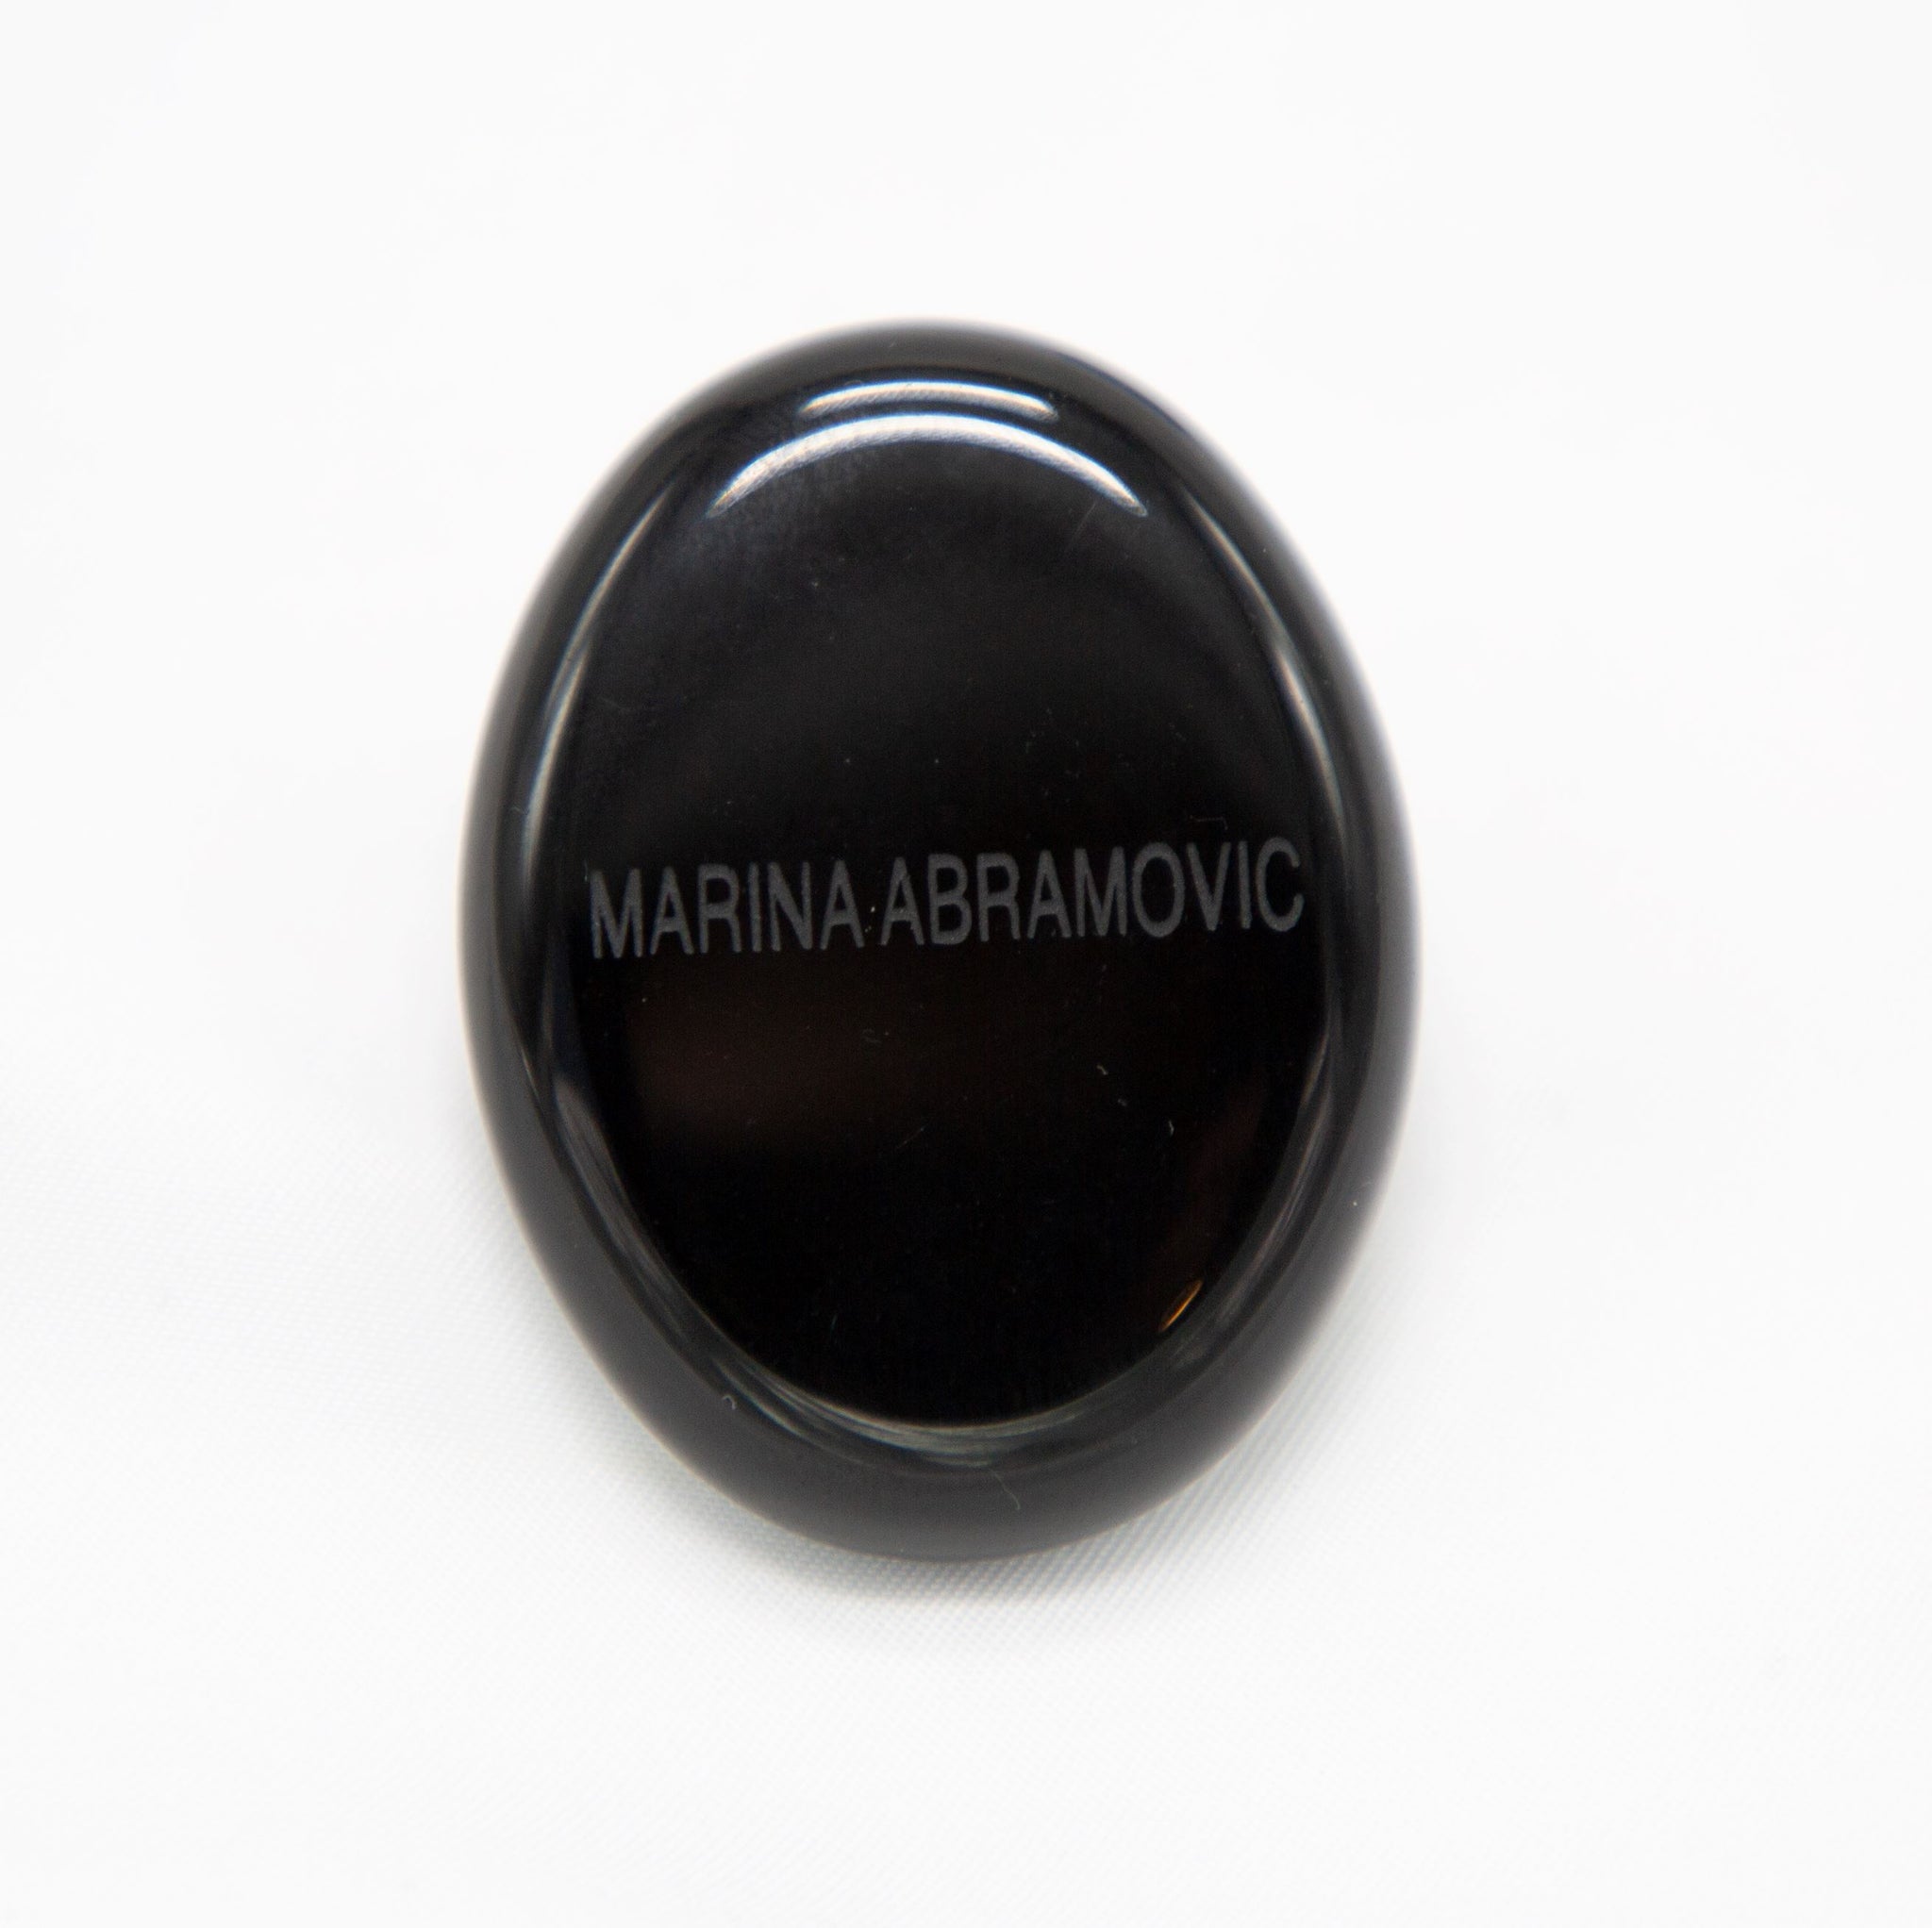 Looking Rock Worry Stone x Marina Abramovic - Third Drawer Down